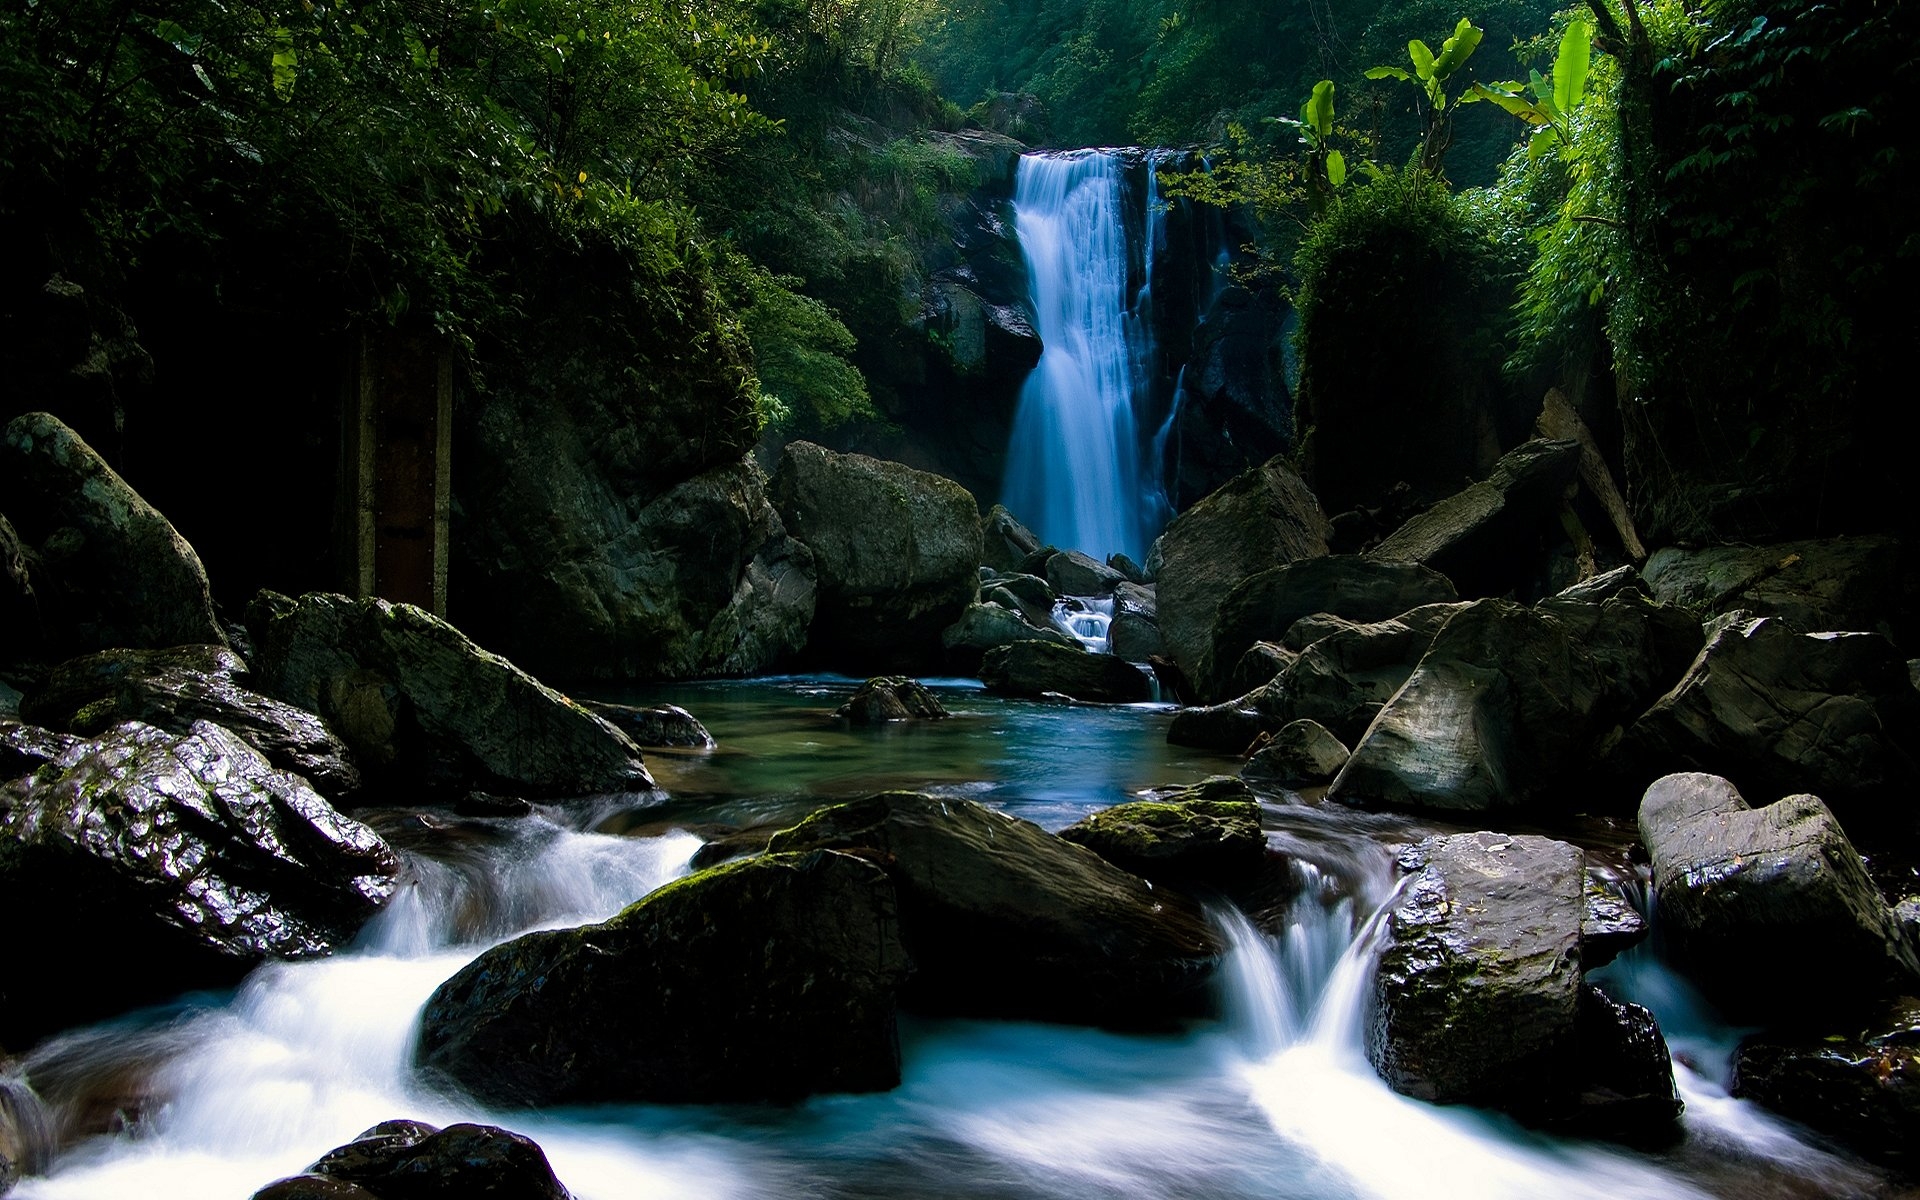 Descarga gratis la imagen Naturaleza, Agua, Cascada, Vegetación, Río, Tierra/naturaleza en el escritorio de tu PC